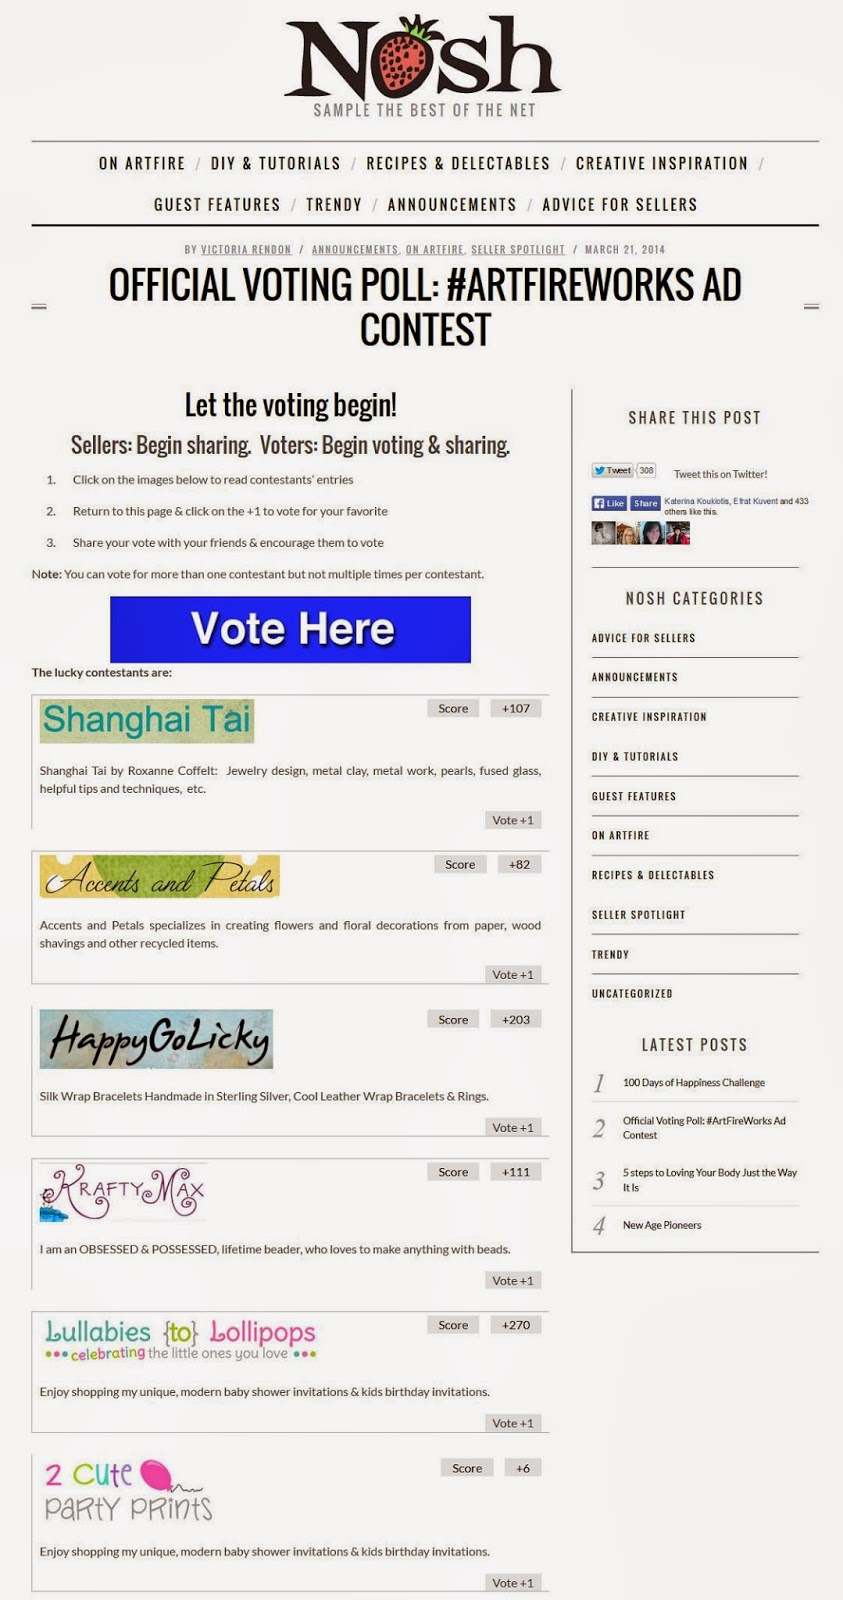 http://www.artfire.com/nosh/official-voting-poll-artfireworks-ad-contest/